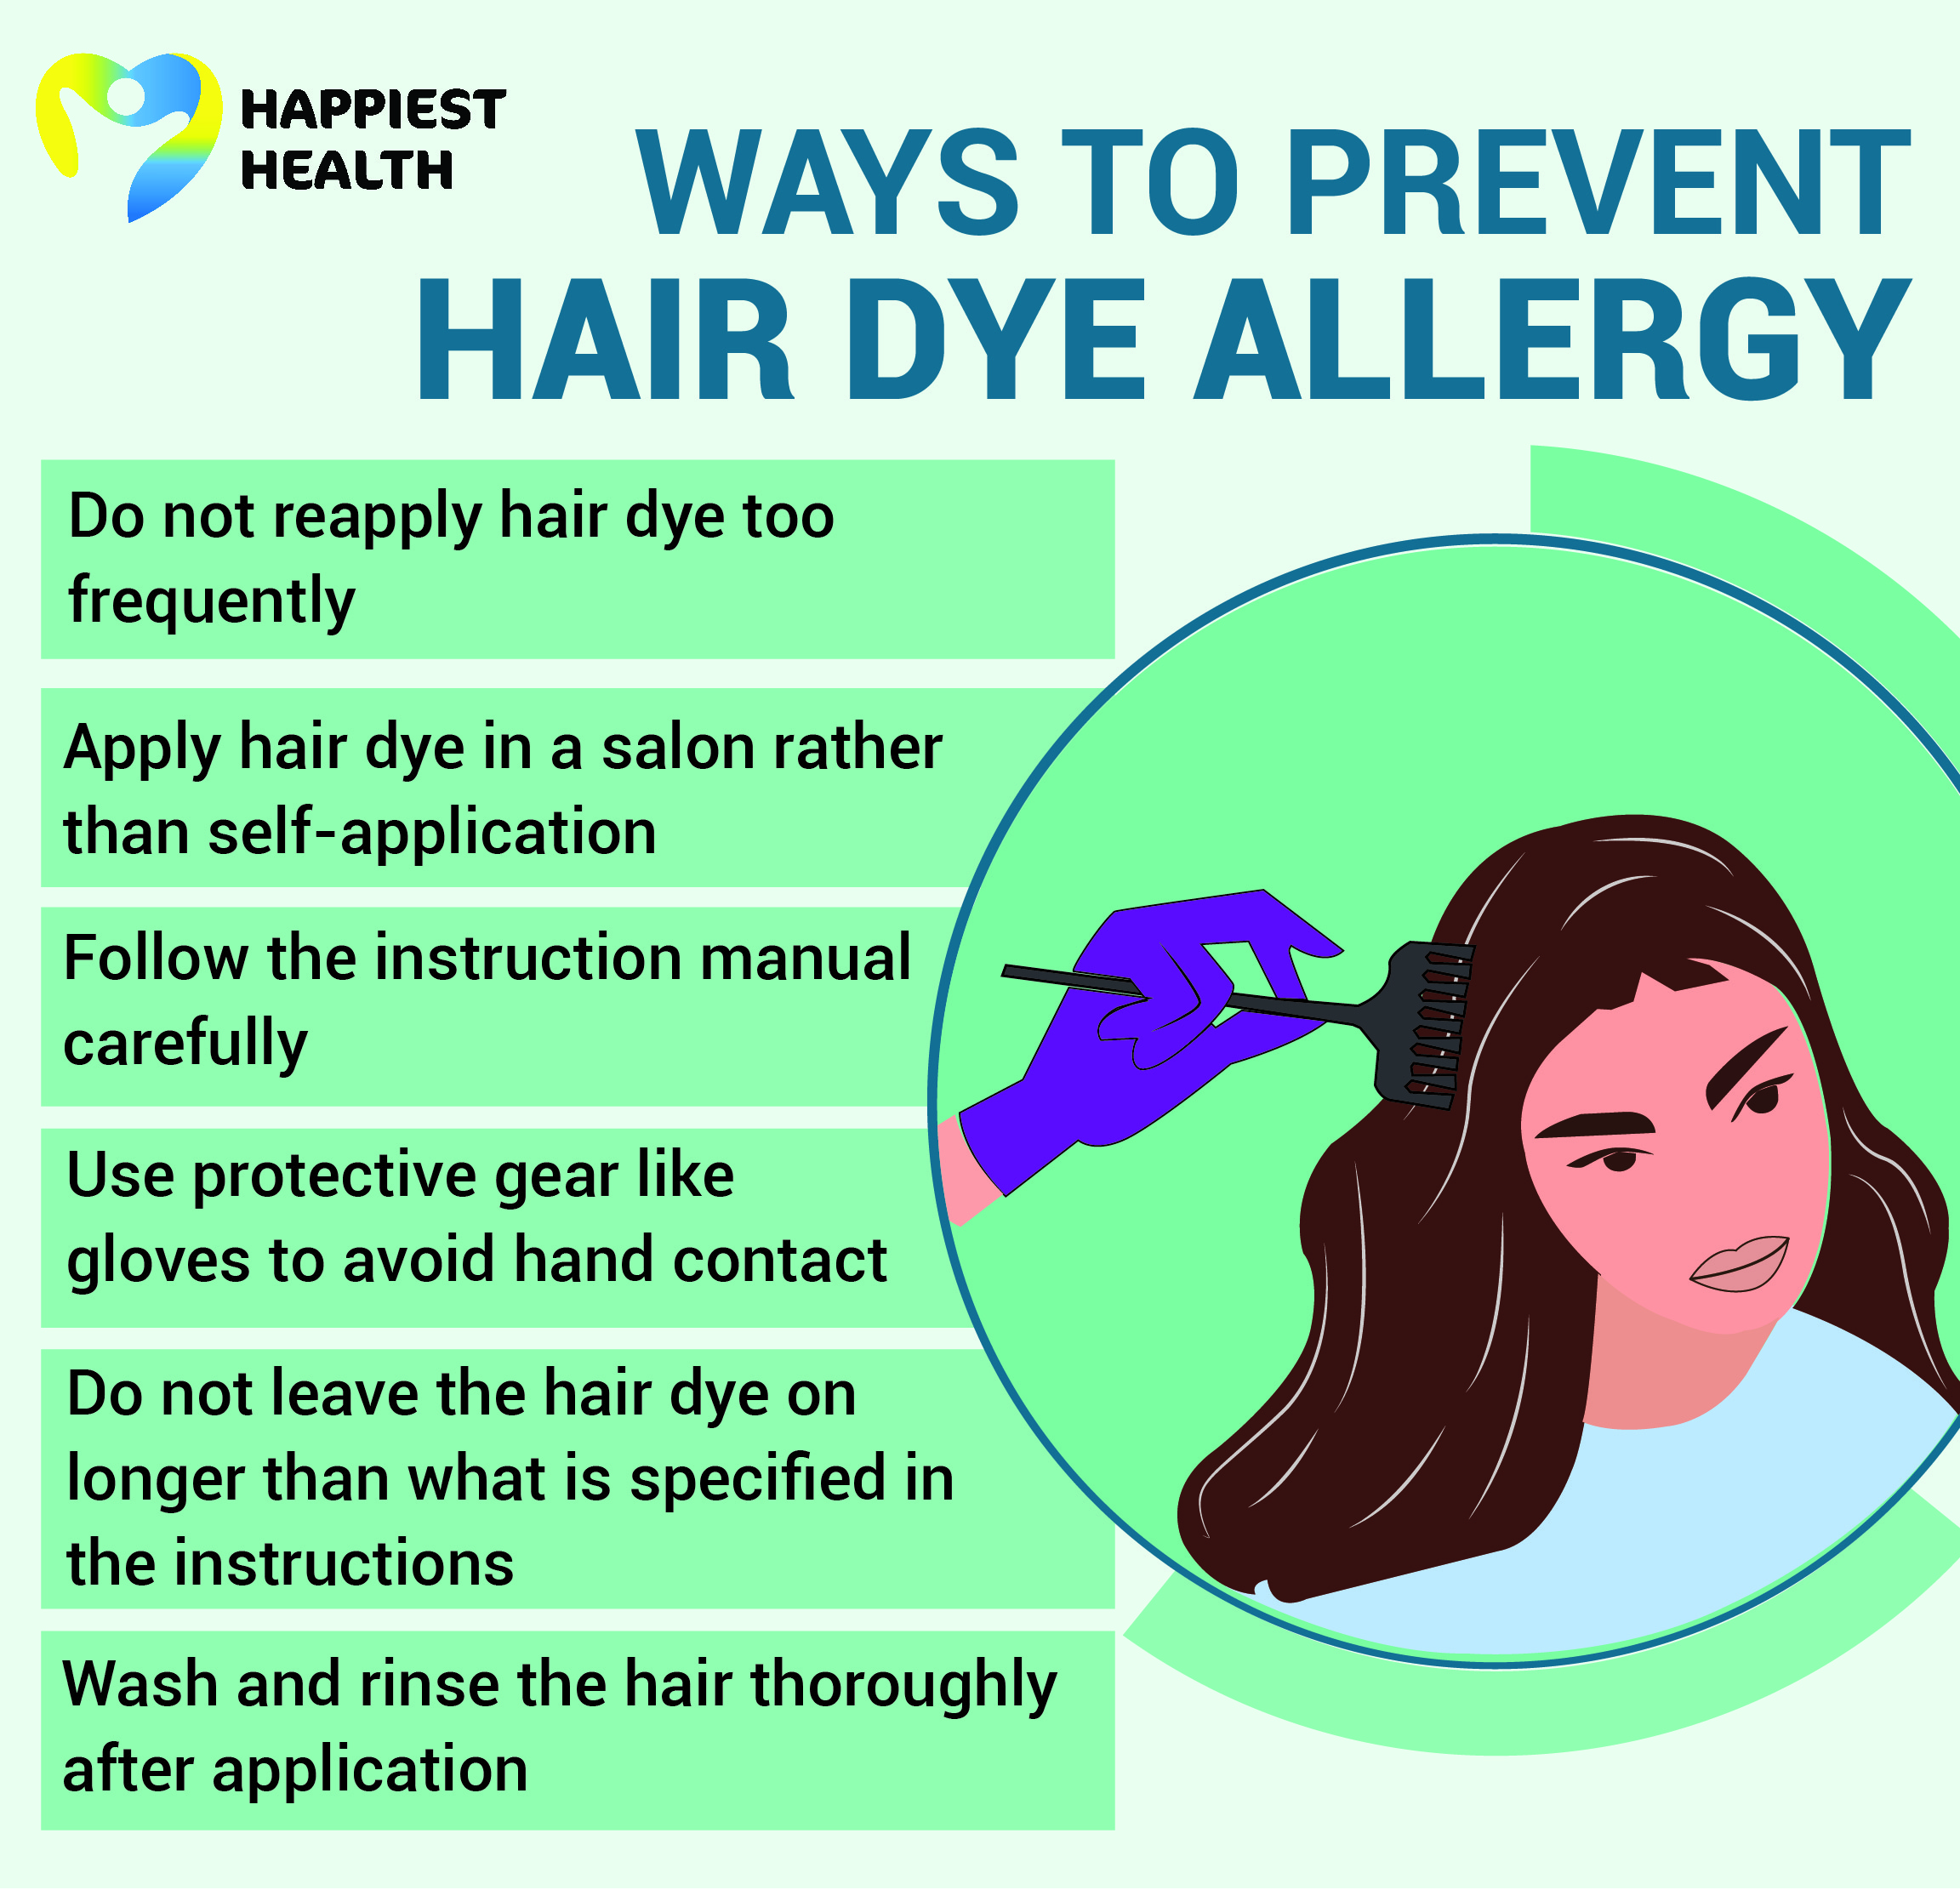 Ways to prevent hair dye allergy